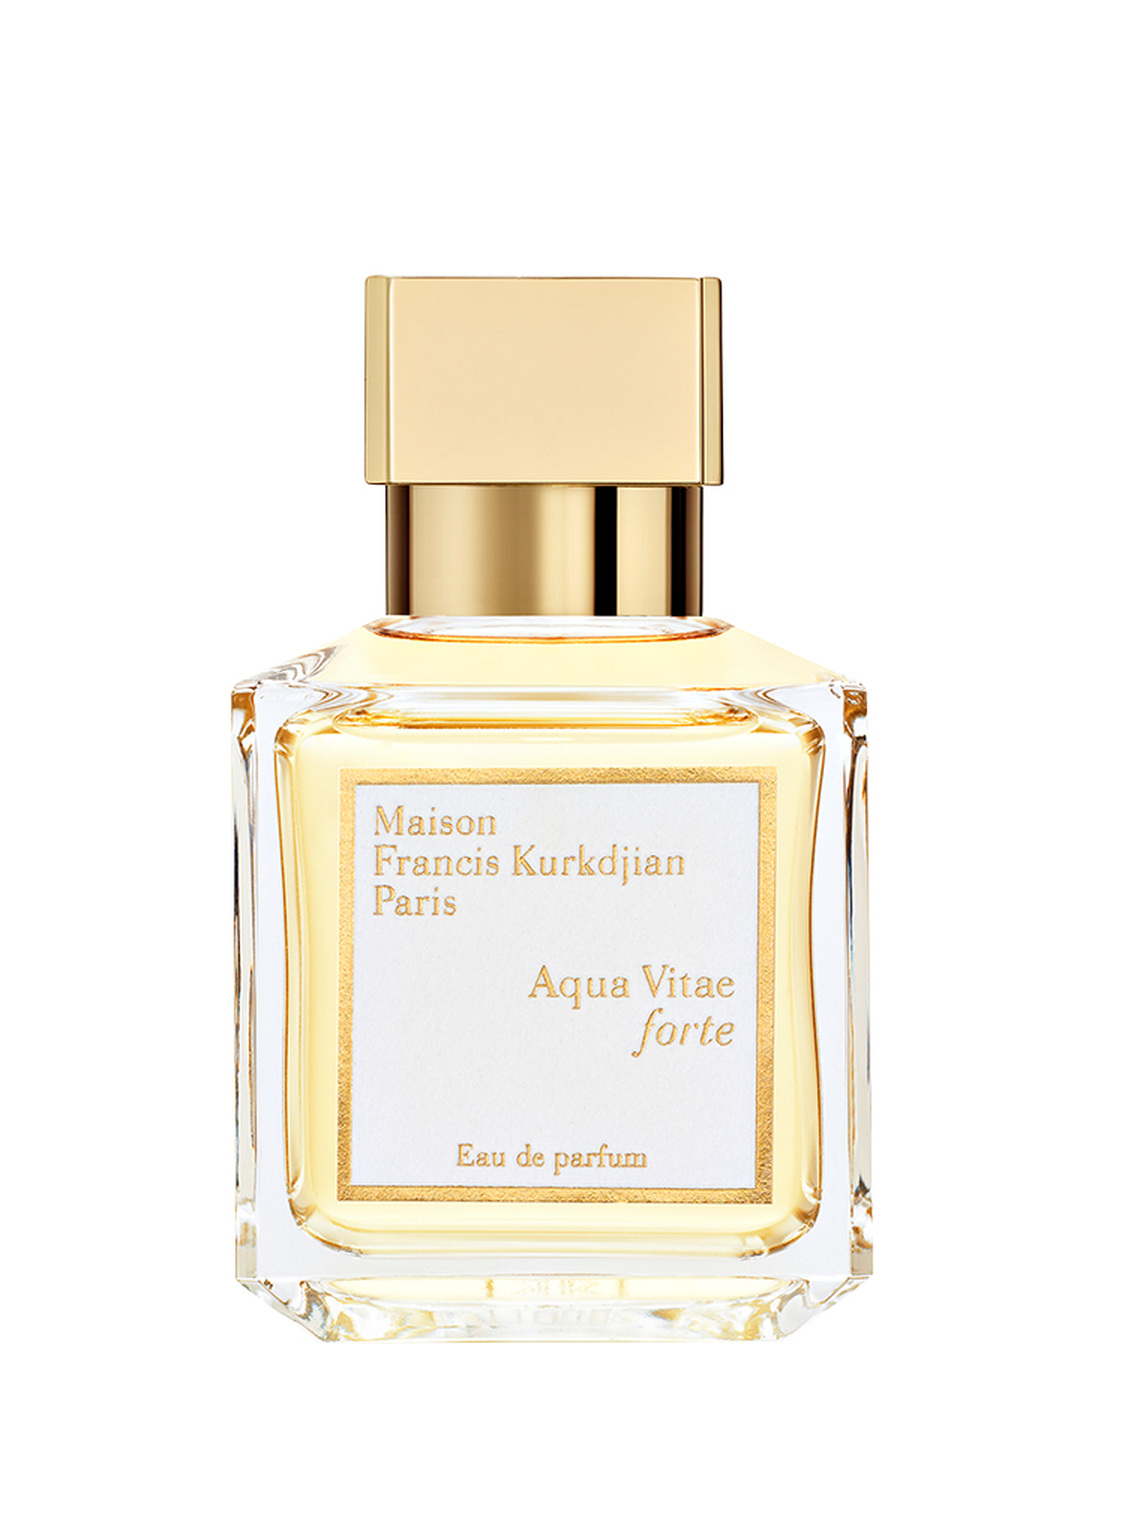 Maison Francis Kurkdjian Paris Aqua Vitae Forte Eau de Parfum 70 ml